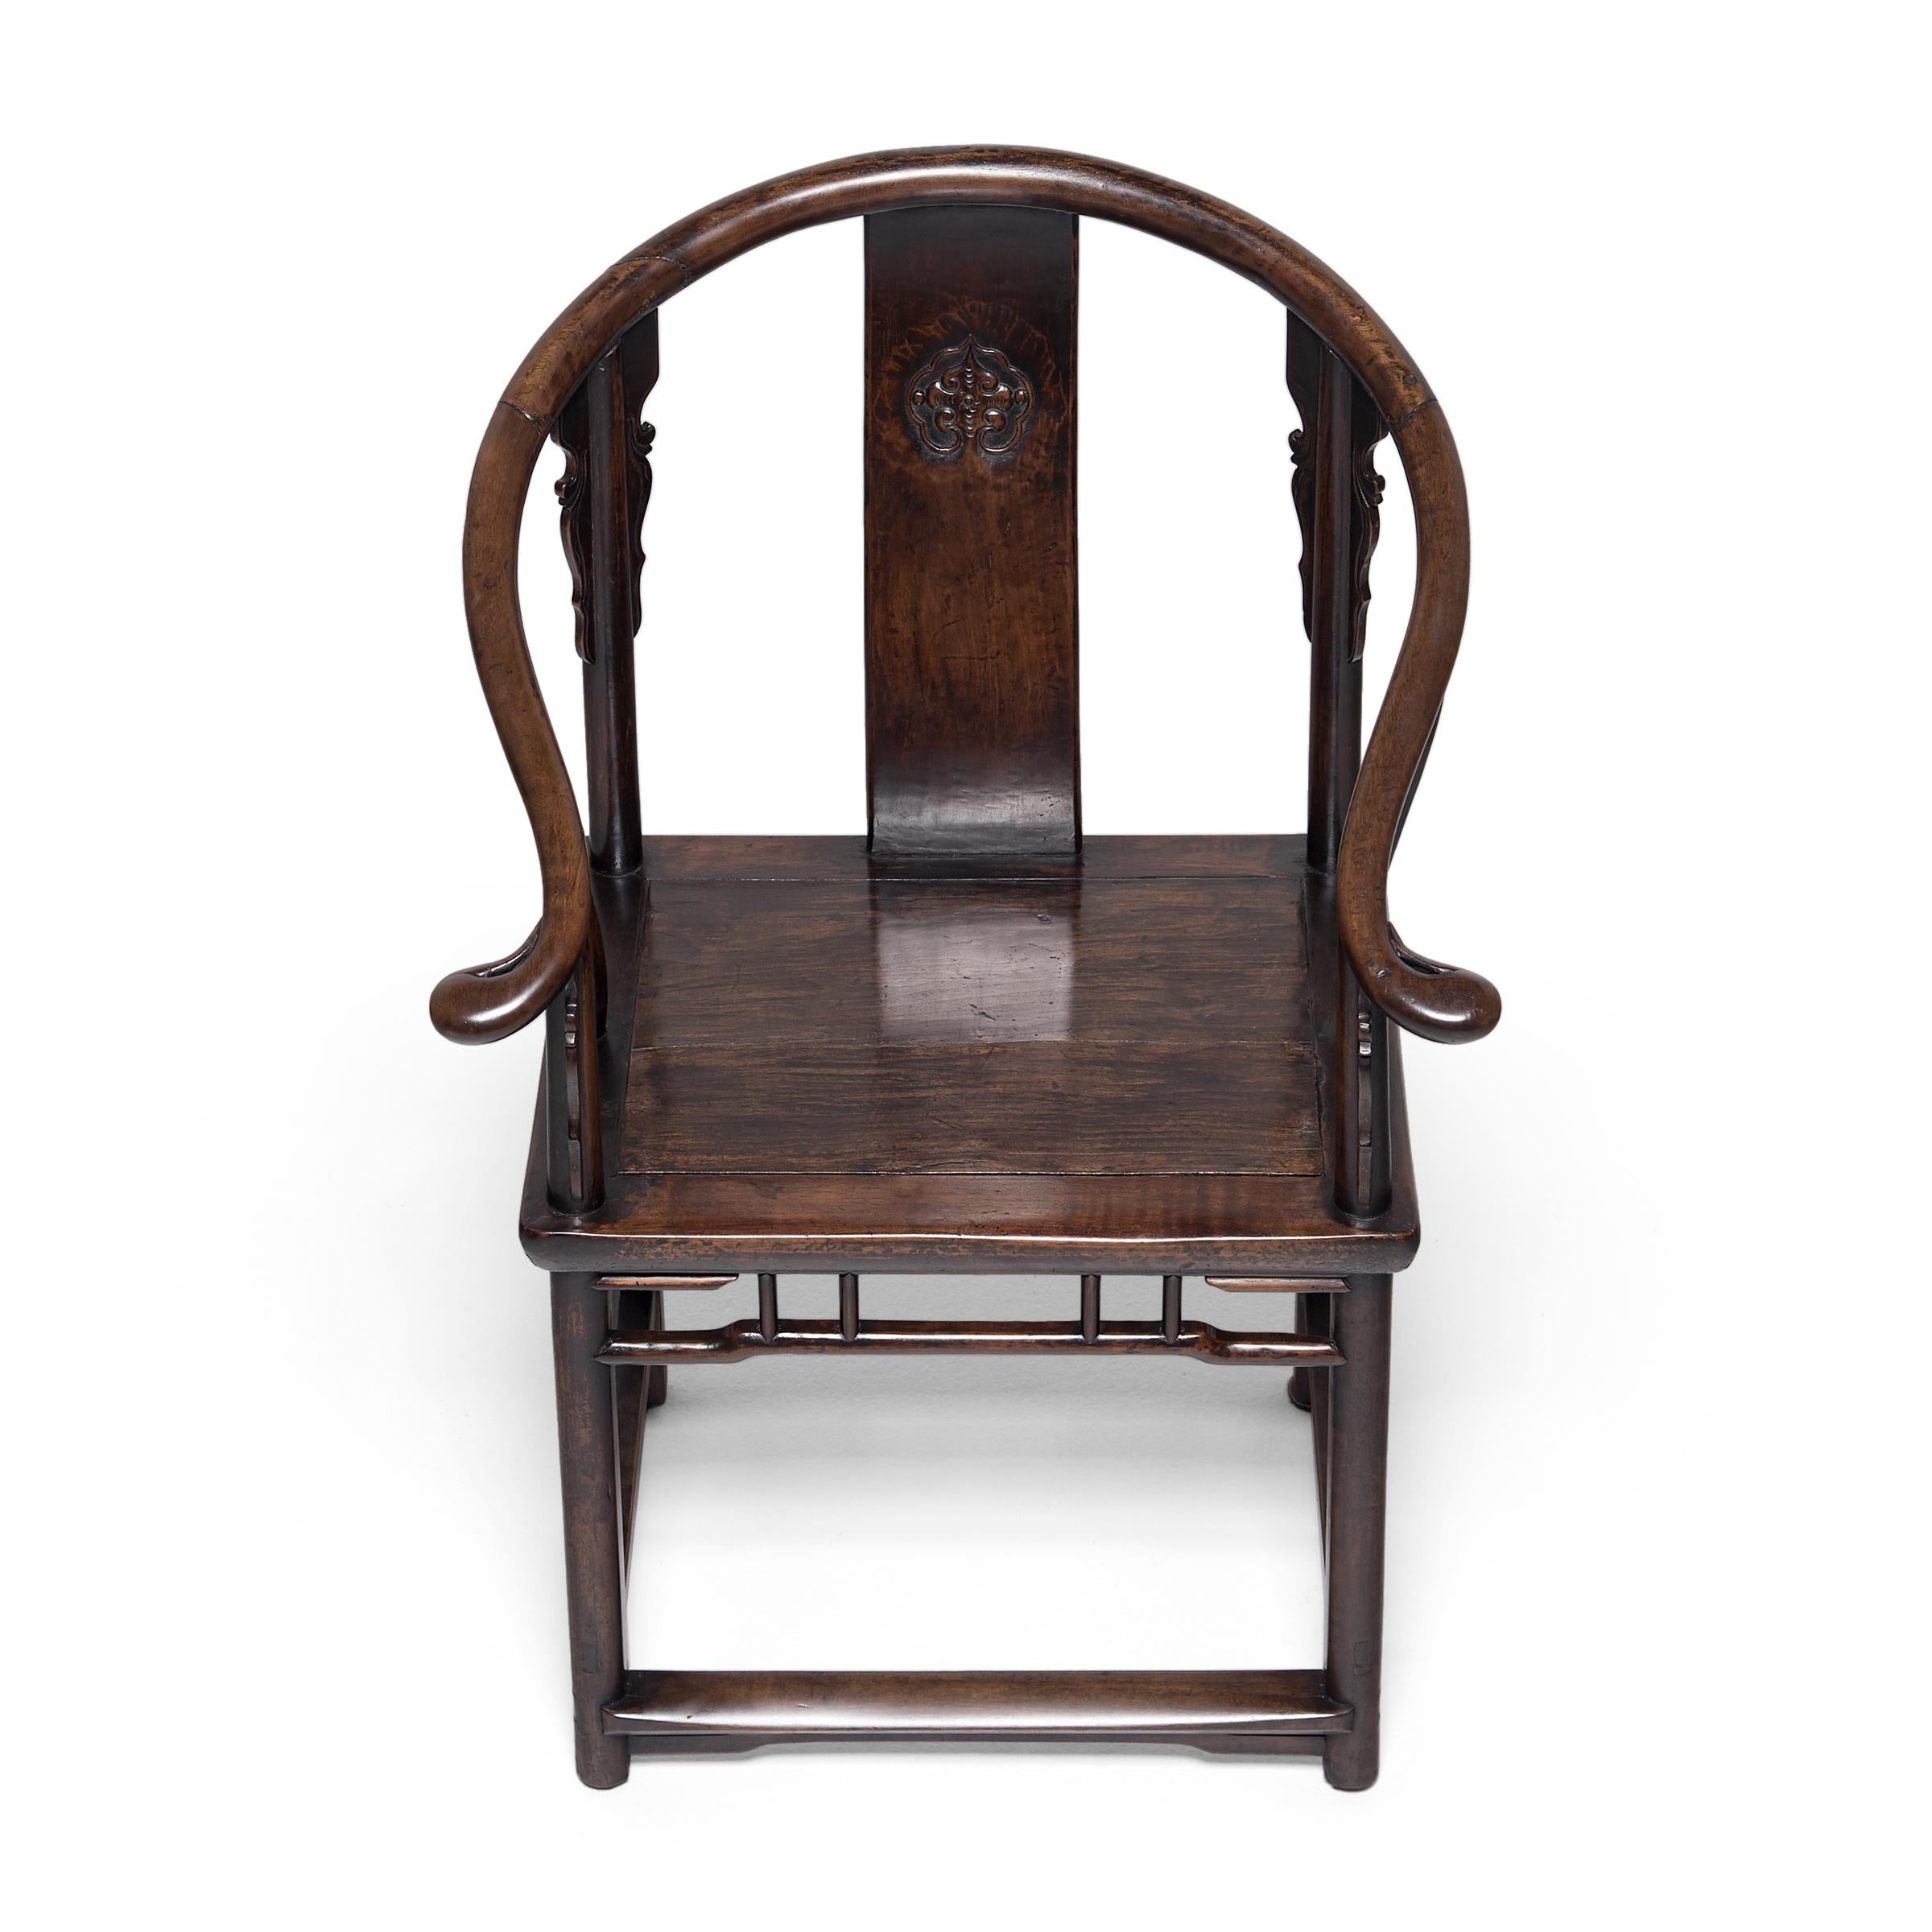 Elm Pair of Chinese Roundback Chairs, c. 1850